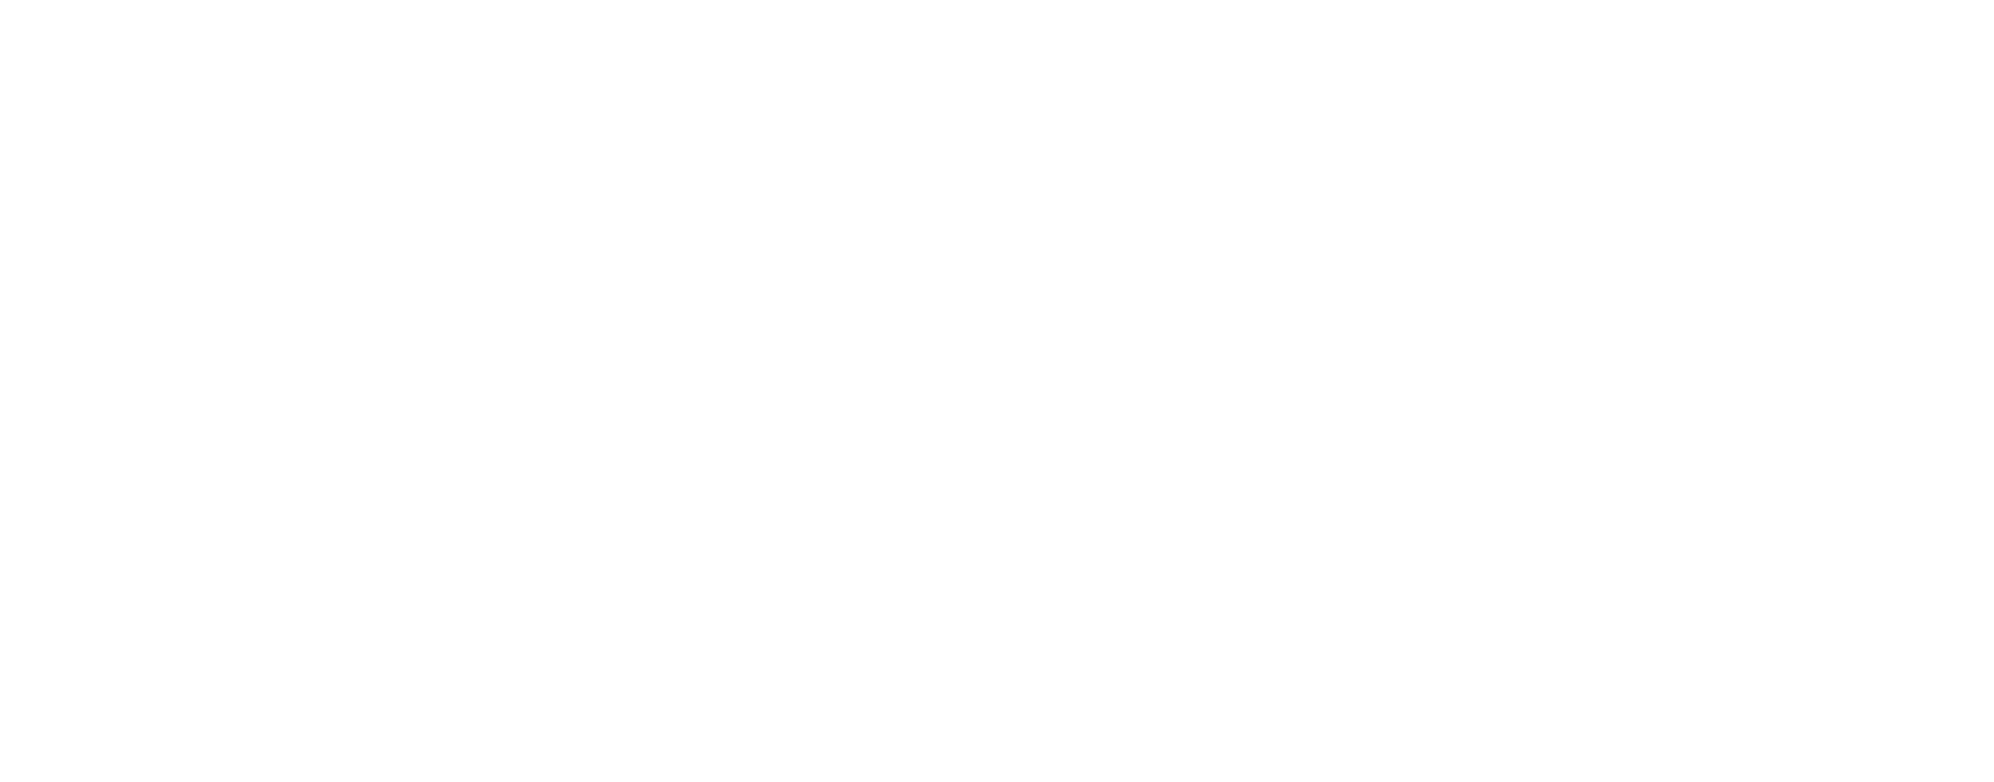 OpenFF Toolkit 0.12.0+11.g5a7bafb8.dirty documentation logo